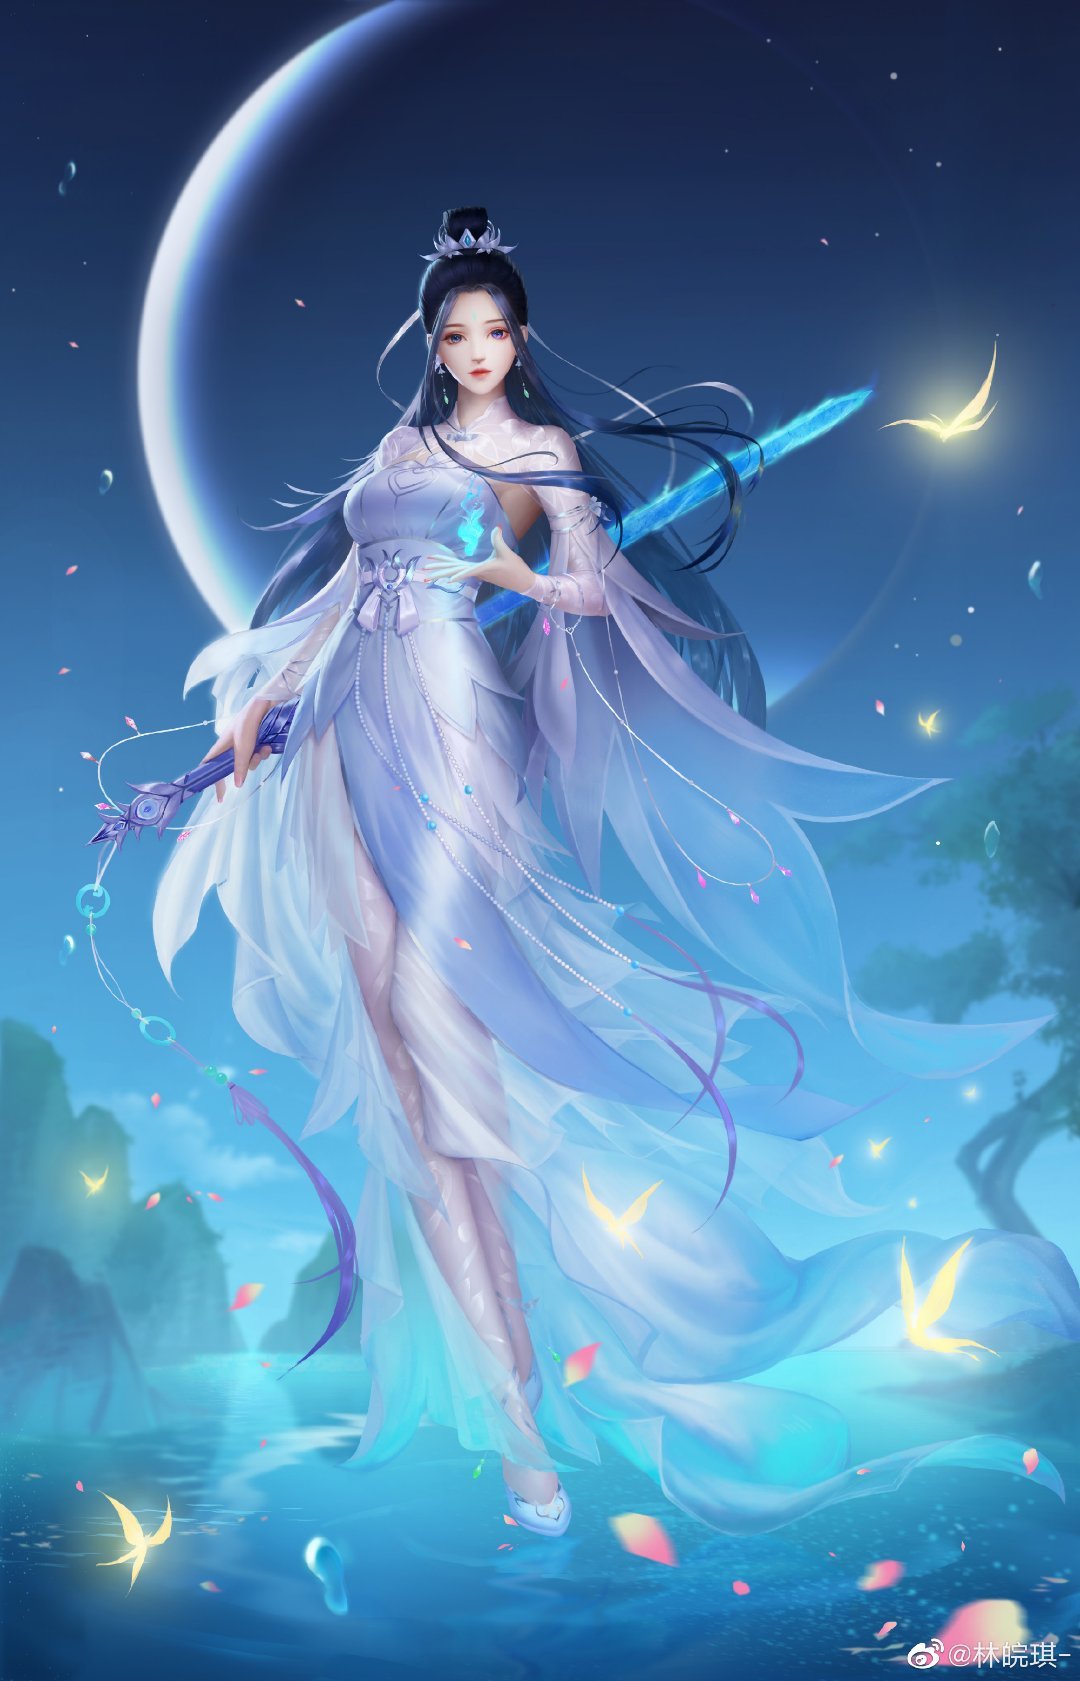 Богиня луны 5 букв. Чанъэ богиня Луны. Чанъэ Чан э китайская богиня. Чанъэ Чан э китайская богиня Луны. Чанъэ богиня Луны арт.